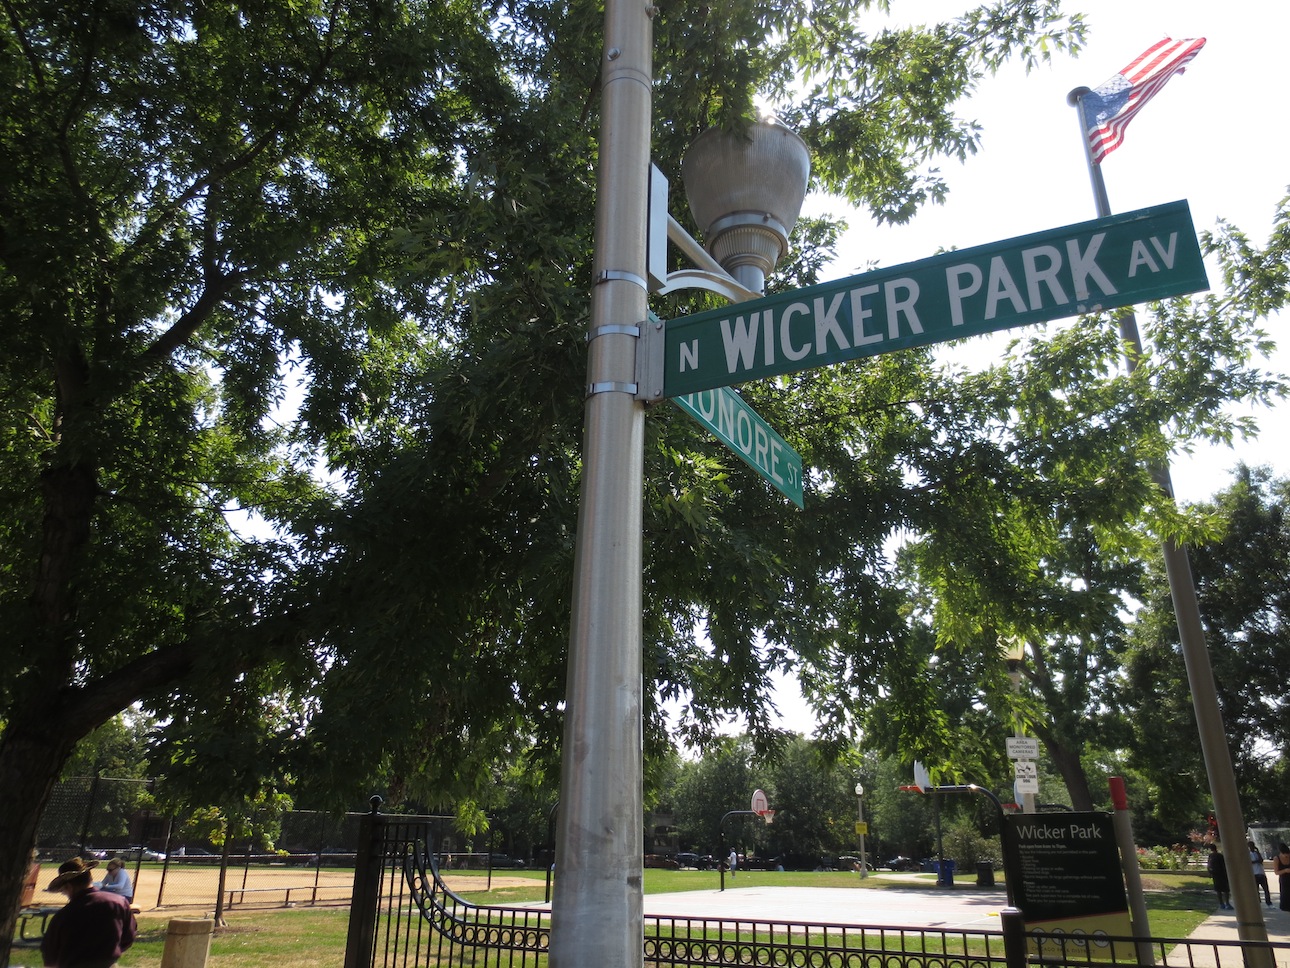 Street sign for Wicker Park St.